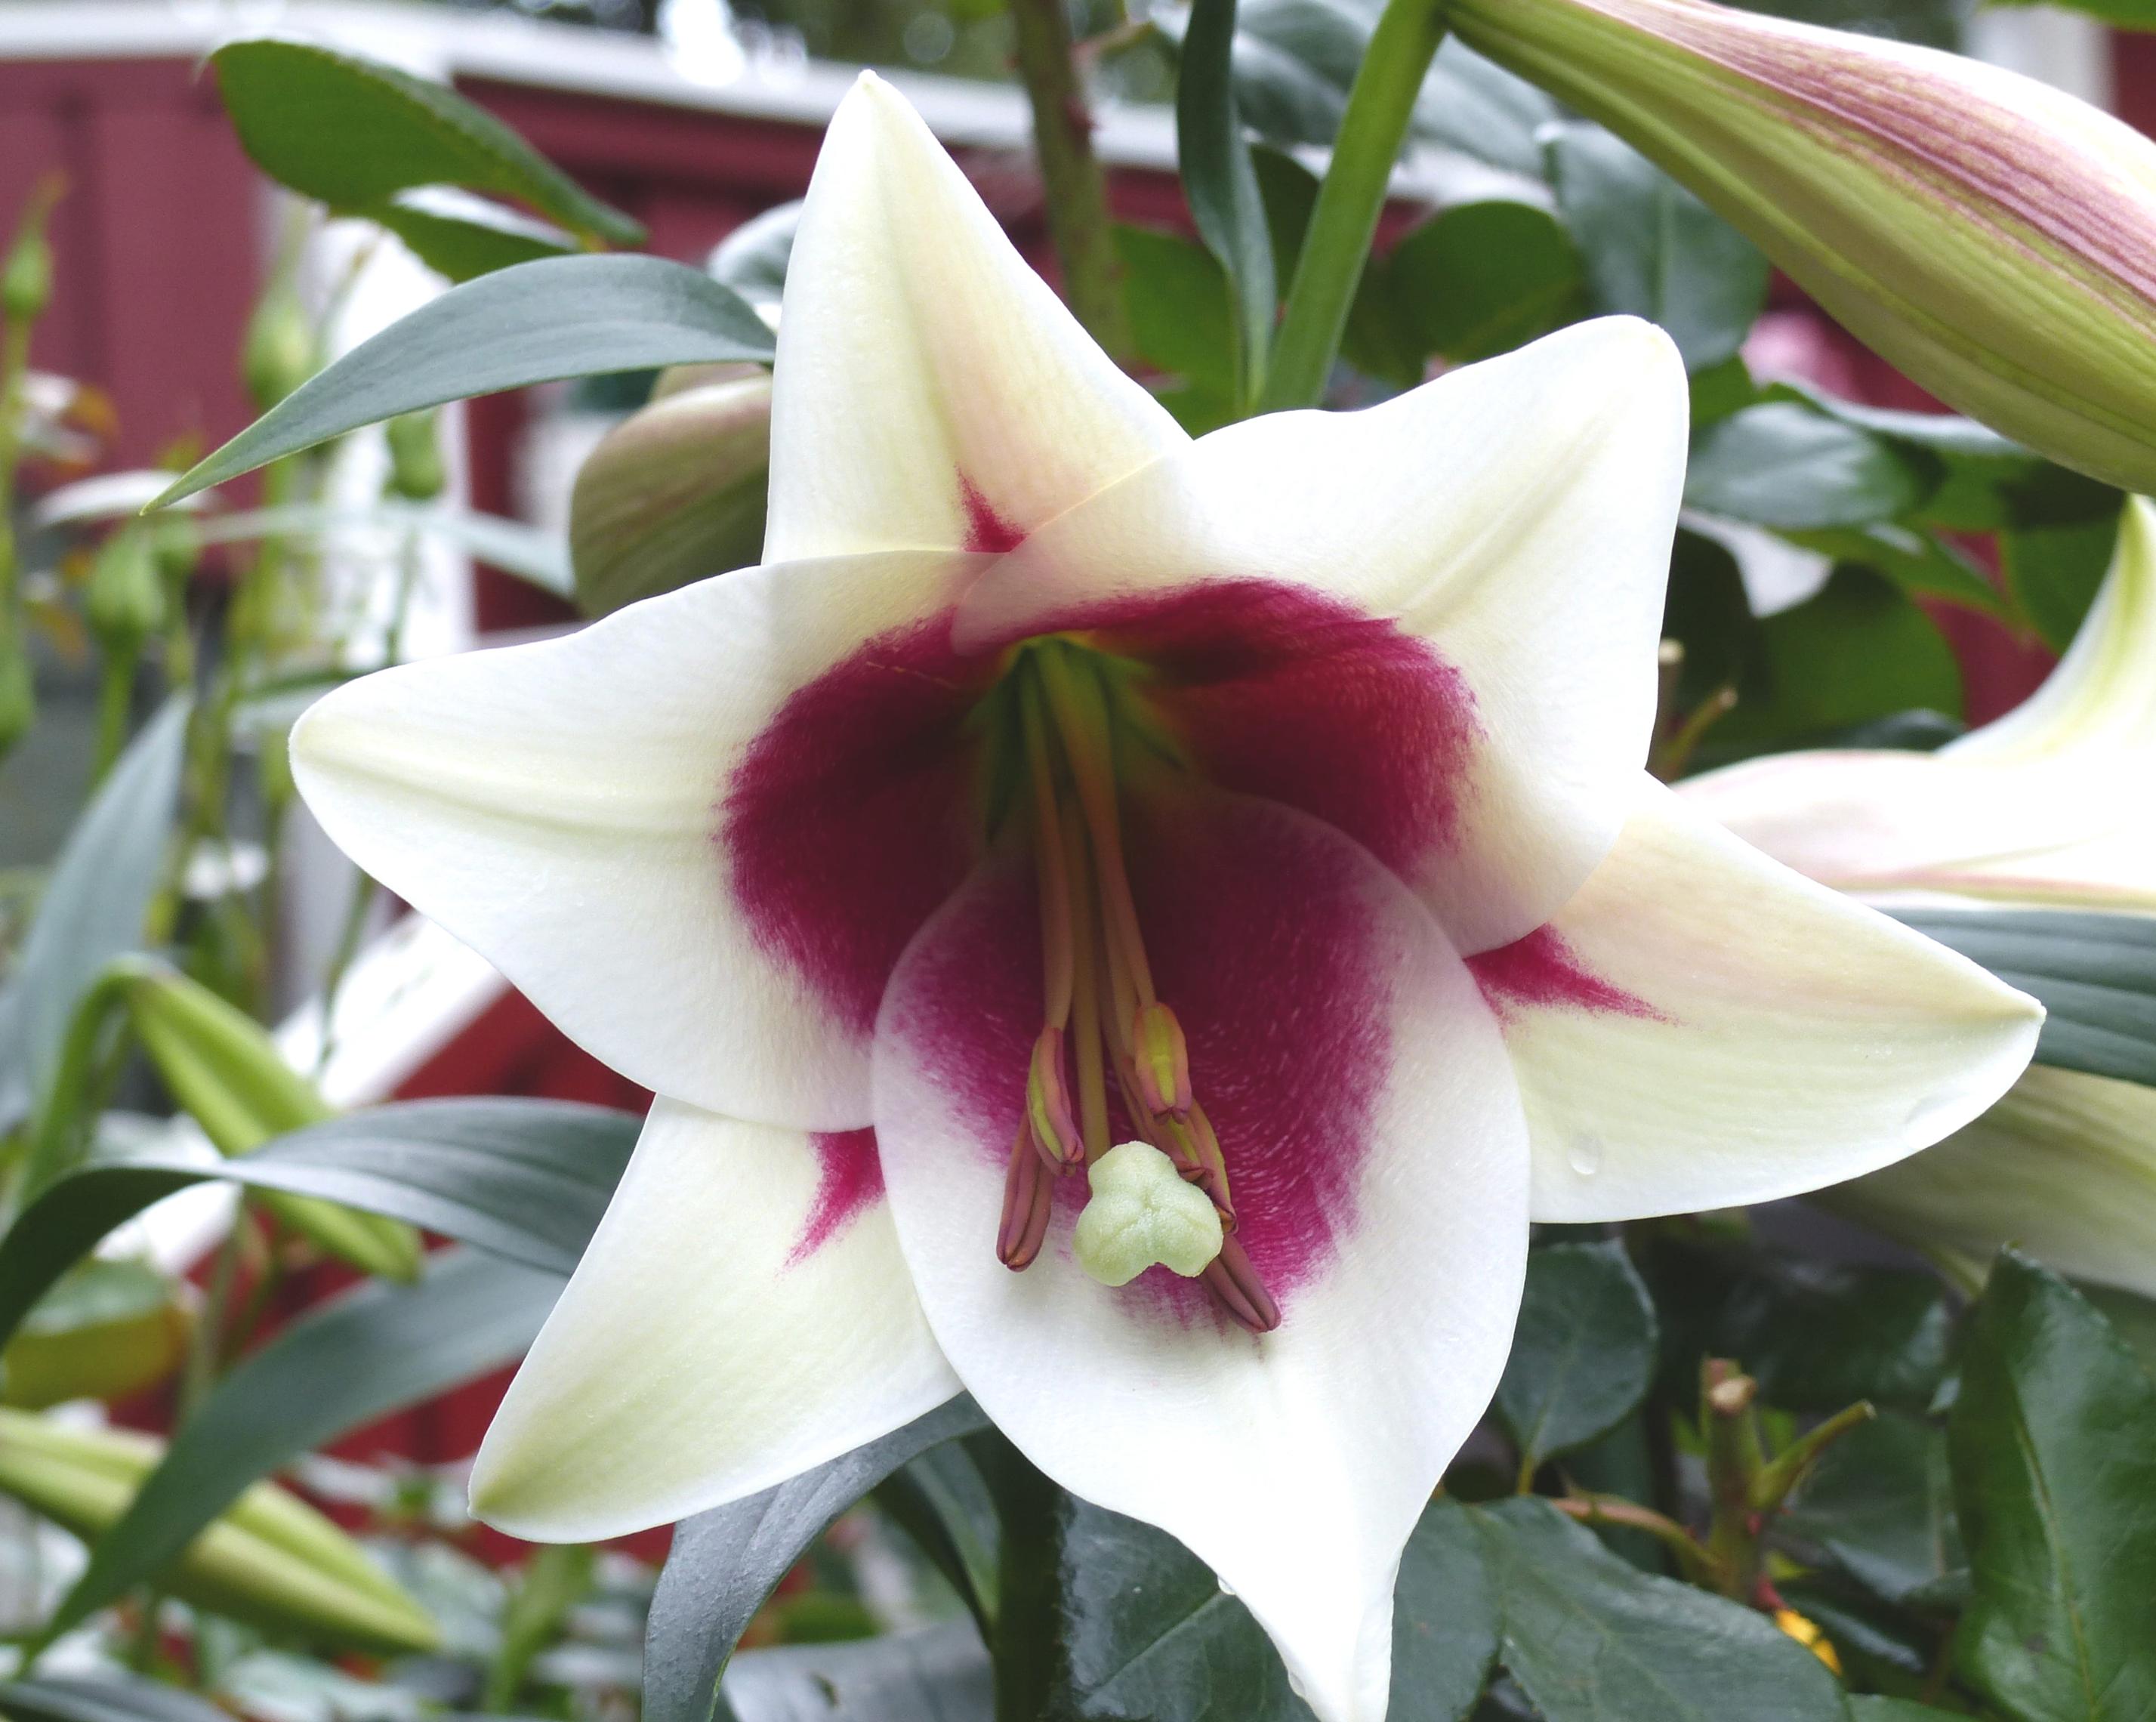 Lilies Oriental Trumpet 'Leslie Woodruff' - Tree Lilies/Orienpet Lily from Leo Berbee Bulb Company